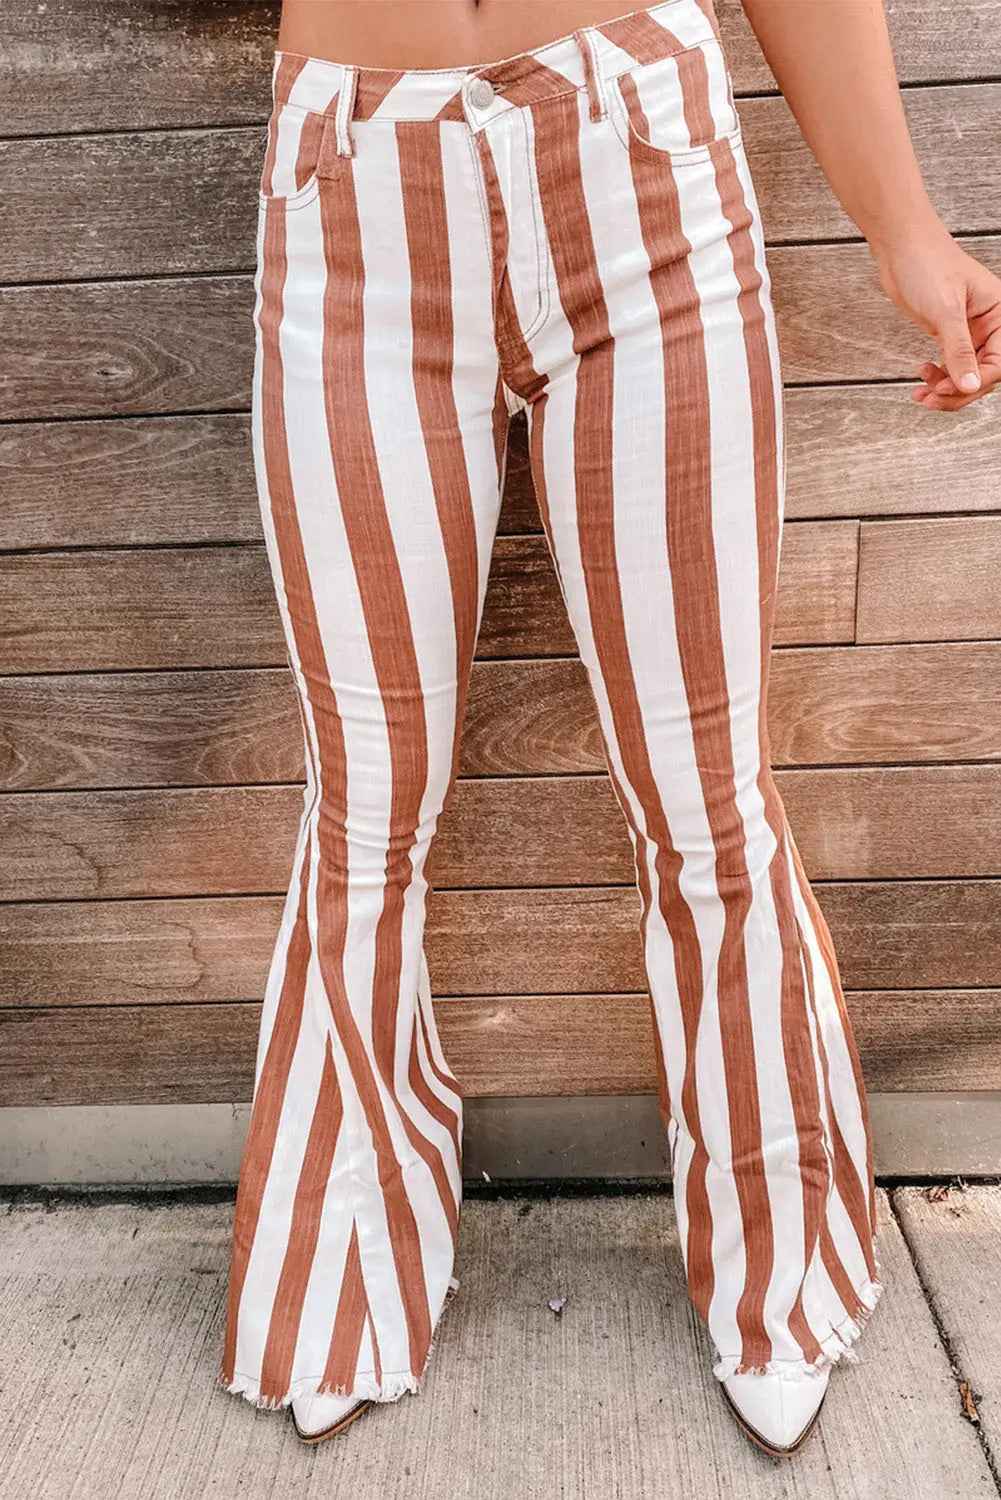 Brown striped fringe bell bottom denim pants - 4 / 95% cotton + 5% elastane - wide leg